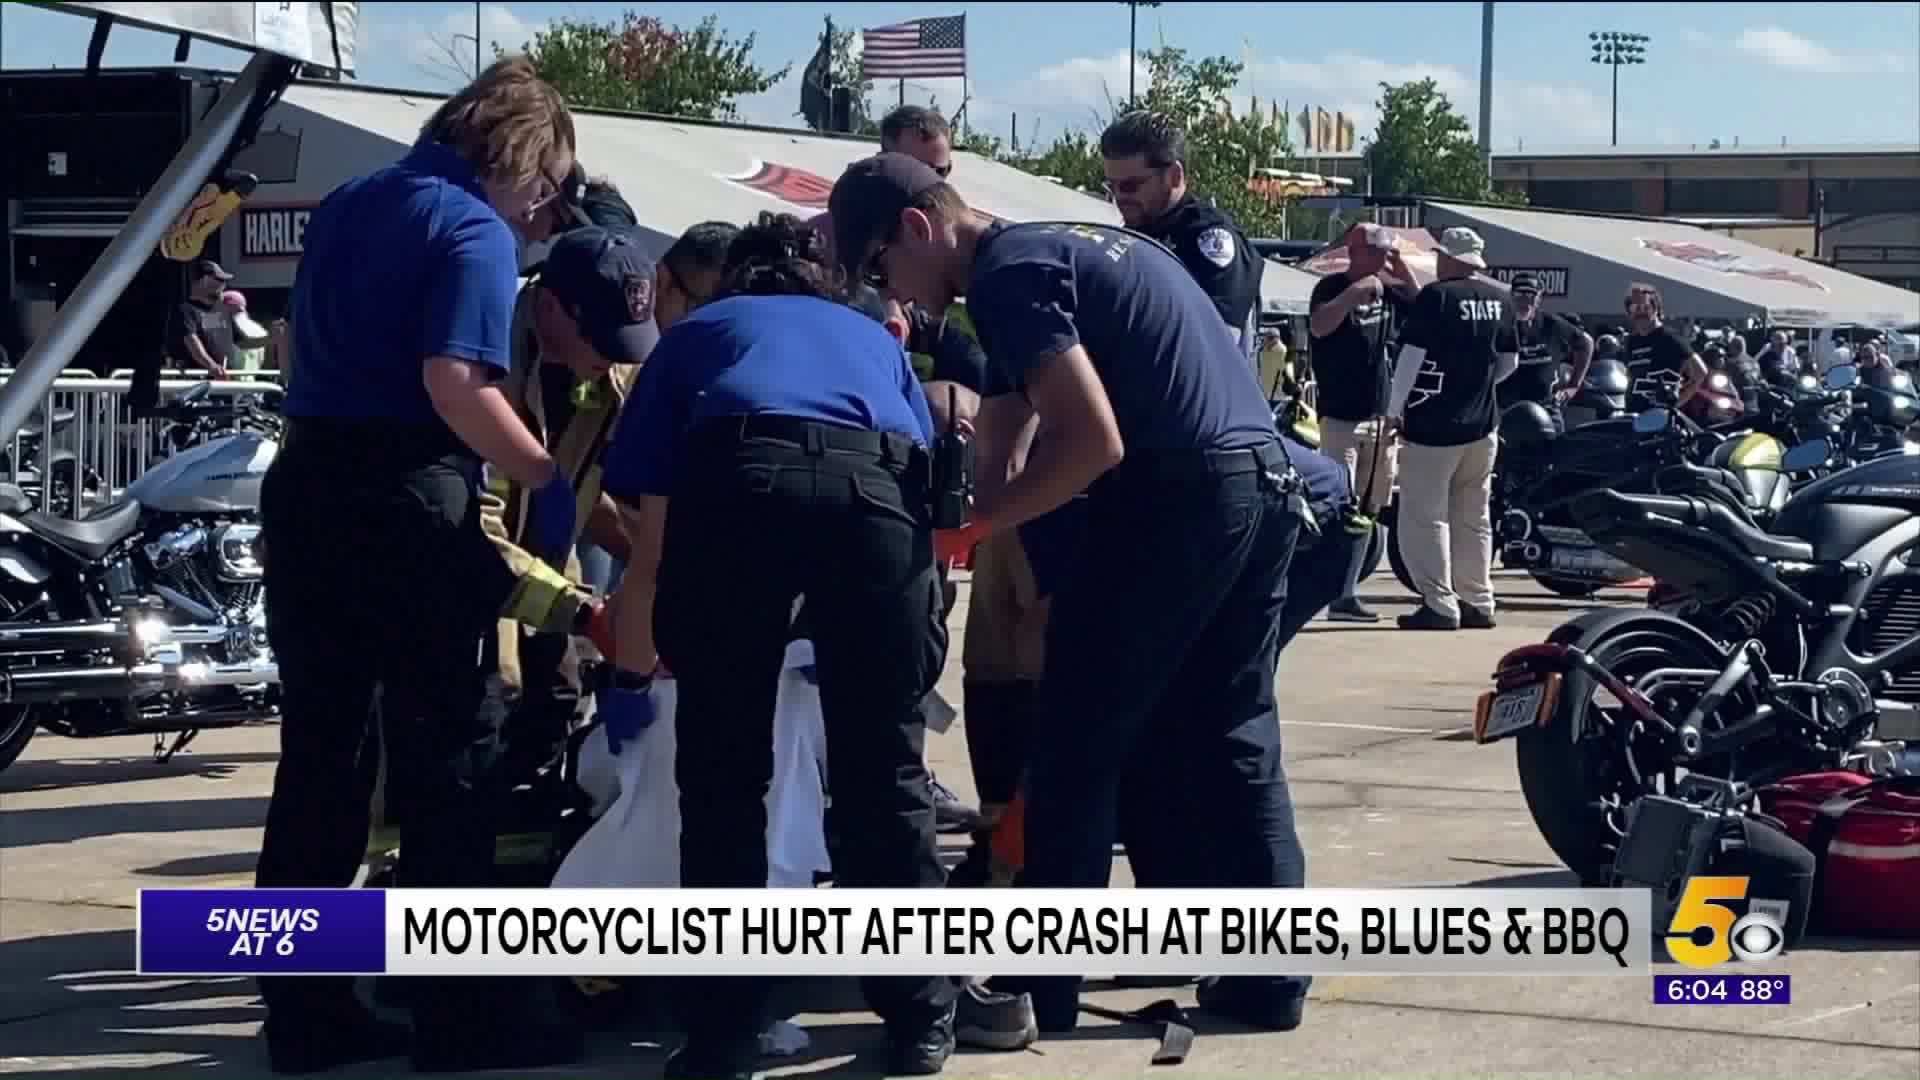 Motorcyclist Injured After Crash At Bikes, Blues & BBQ